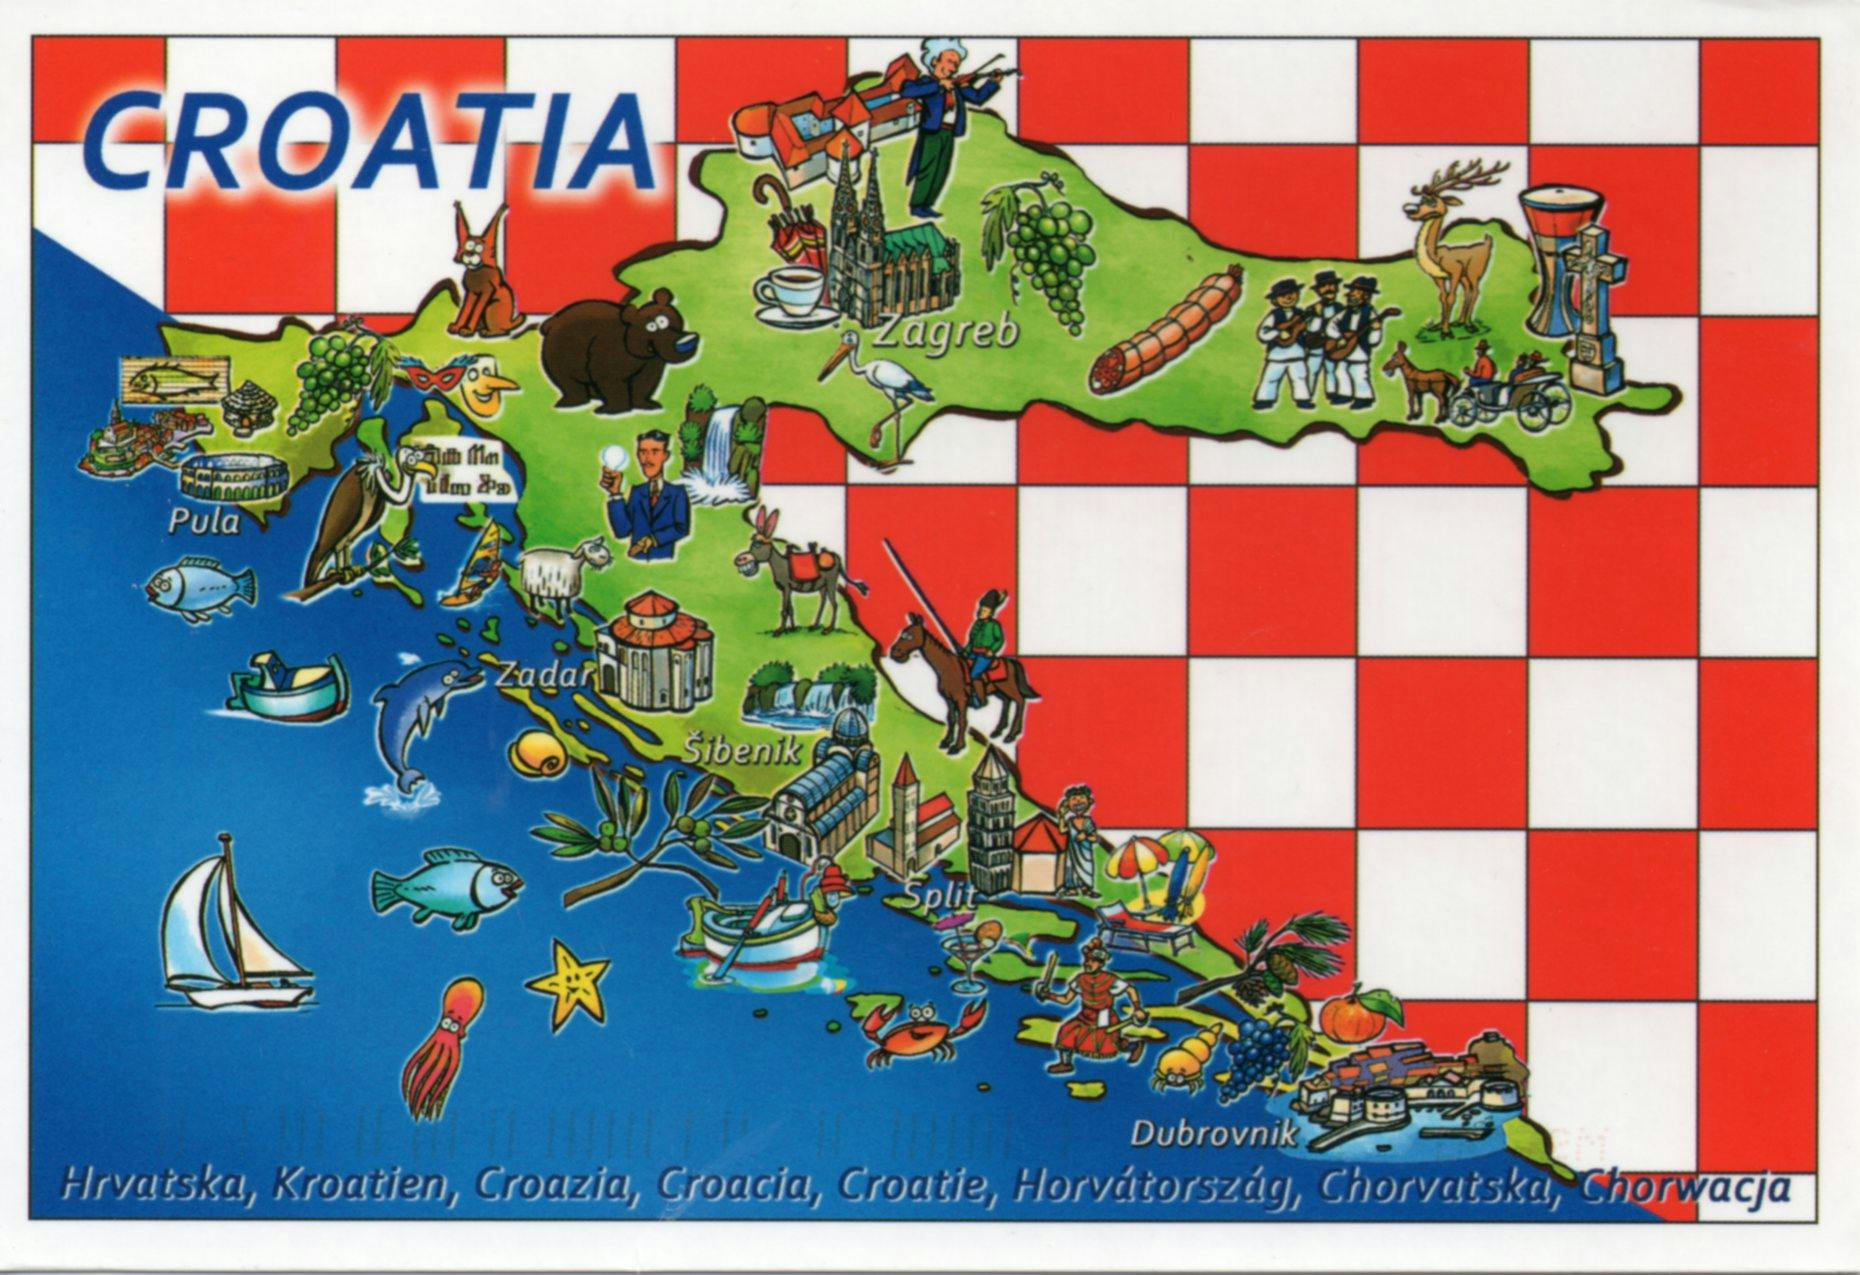 Croatia card front 1